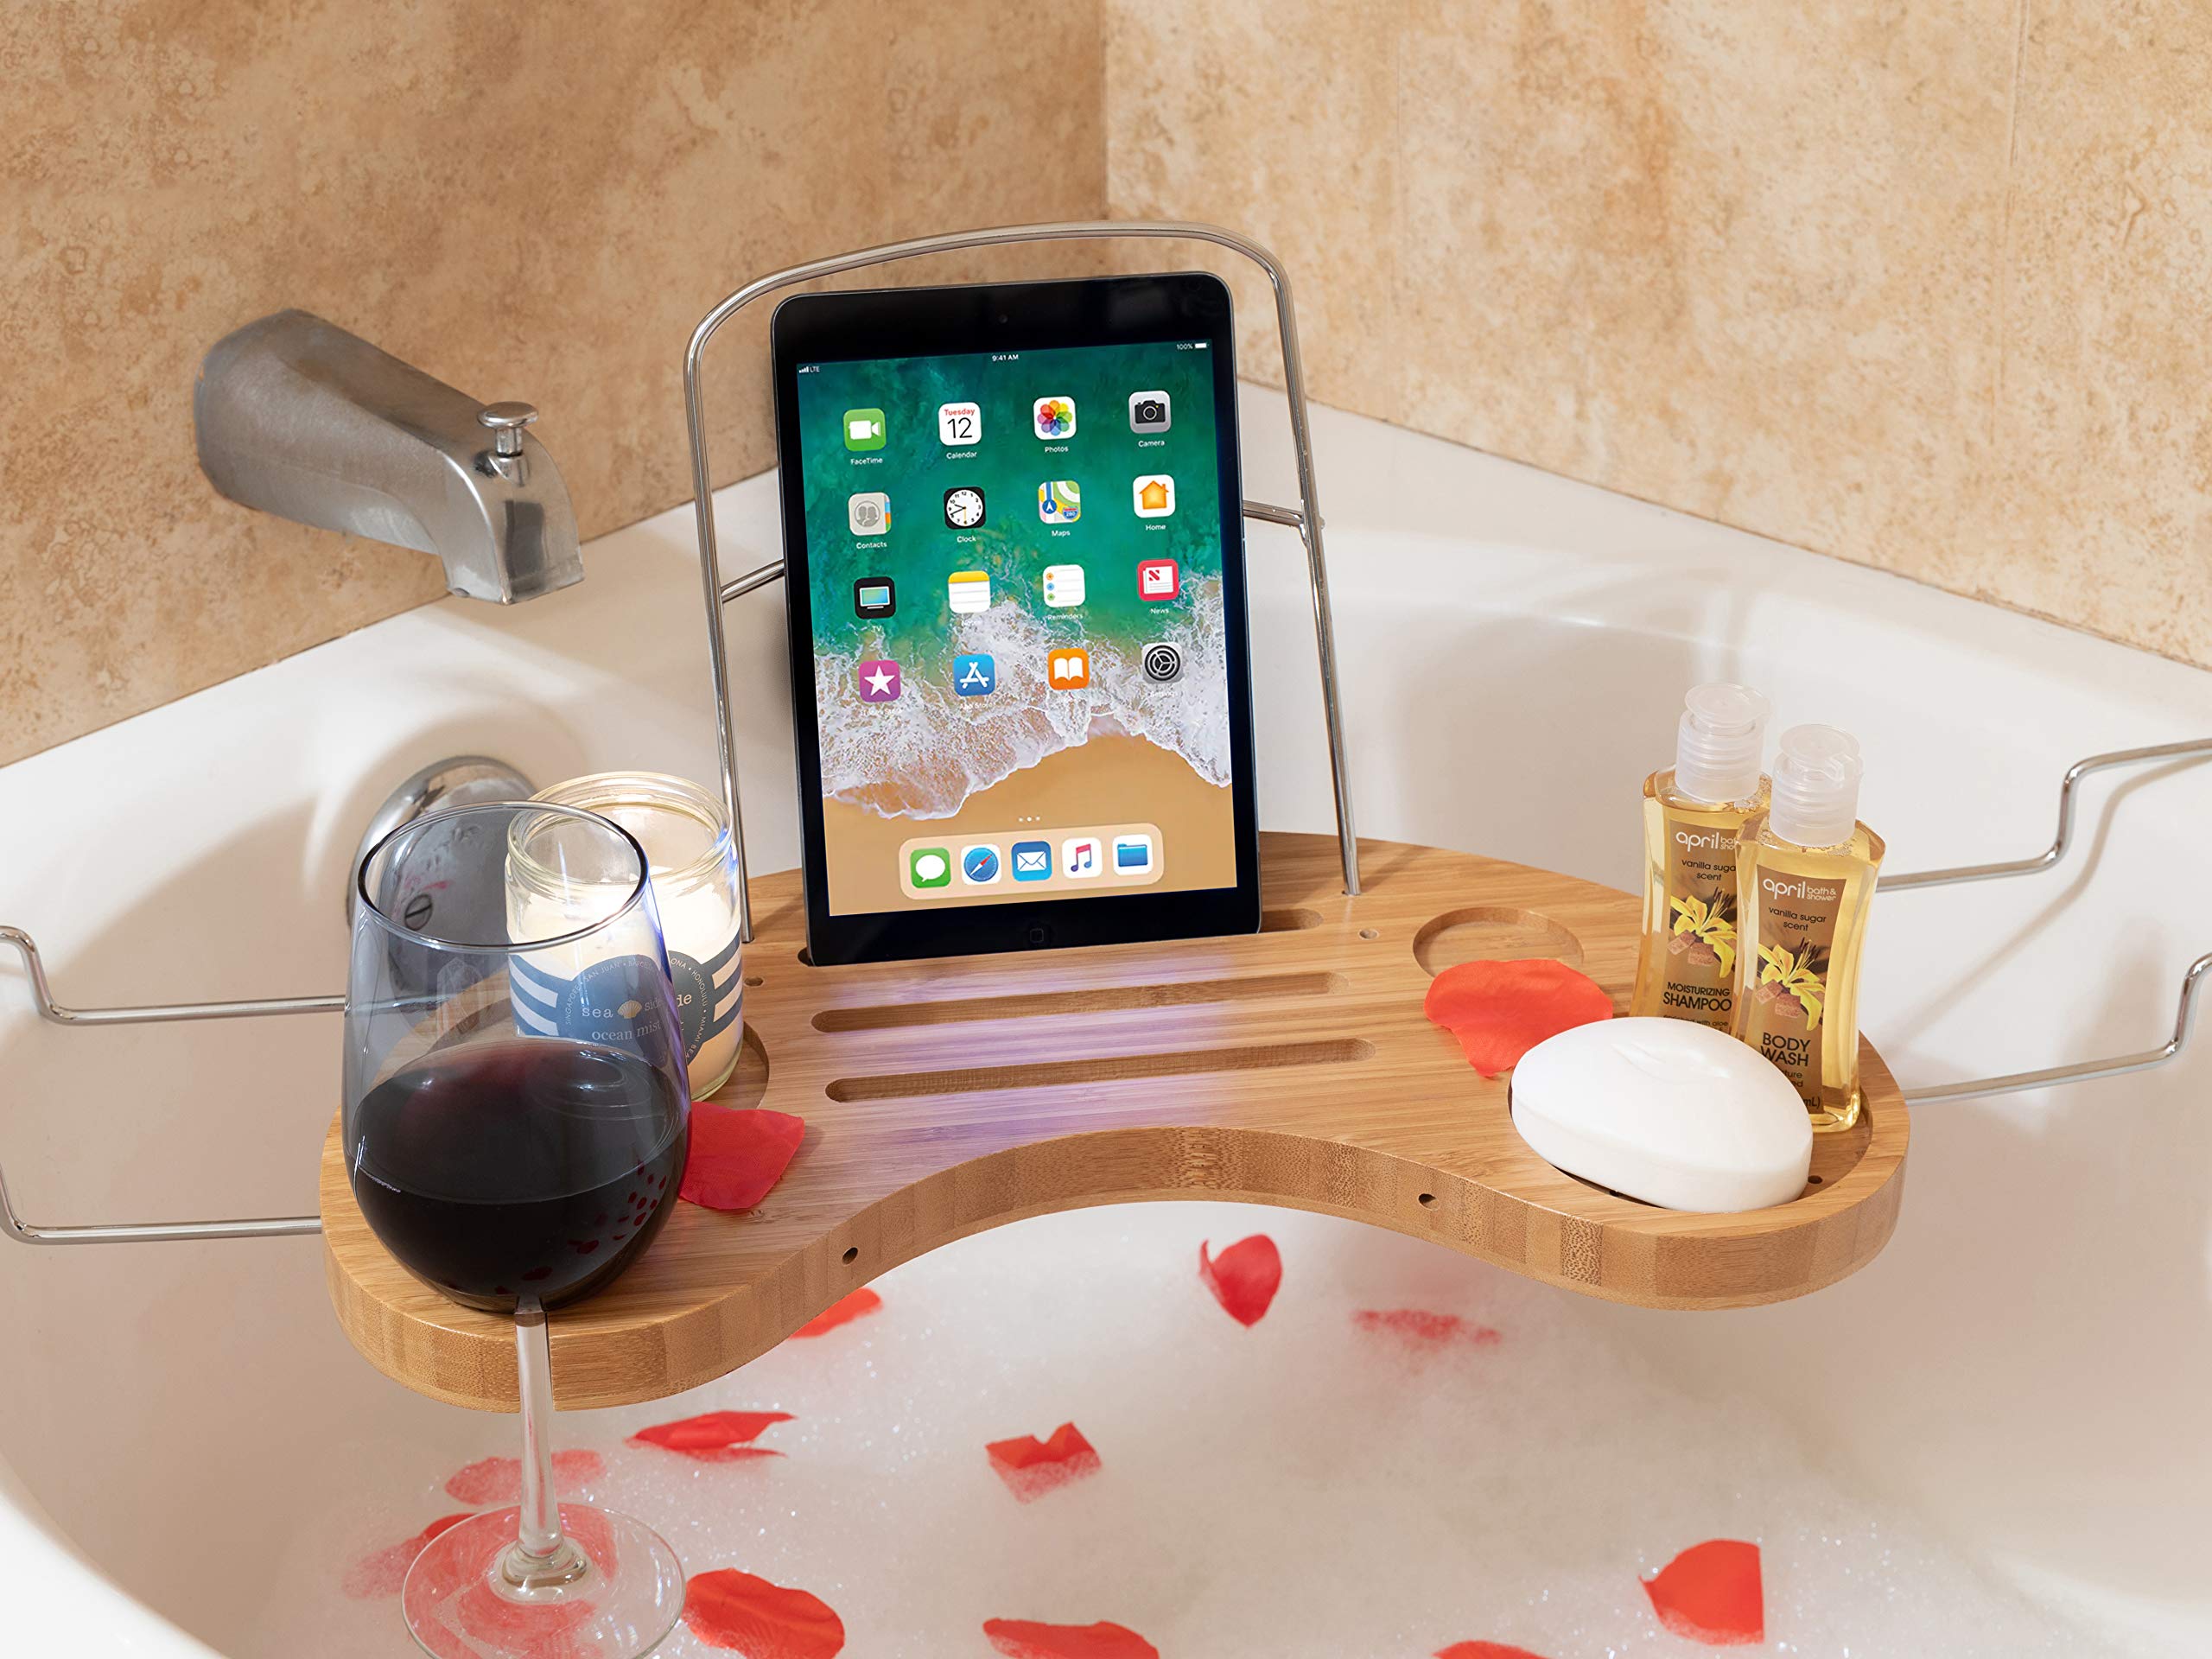 Olivia & Aiden Luxury Bathtub Caddy Tray (Bamboo) Expandable Tub Organizer w/Detachable Tablet Backrest, Wine Glass Holder, Smartphone Holder | Portable Spa Comfort